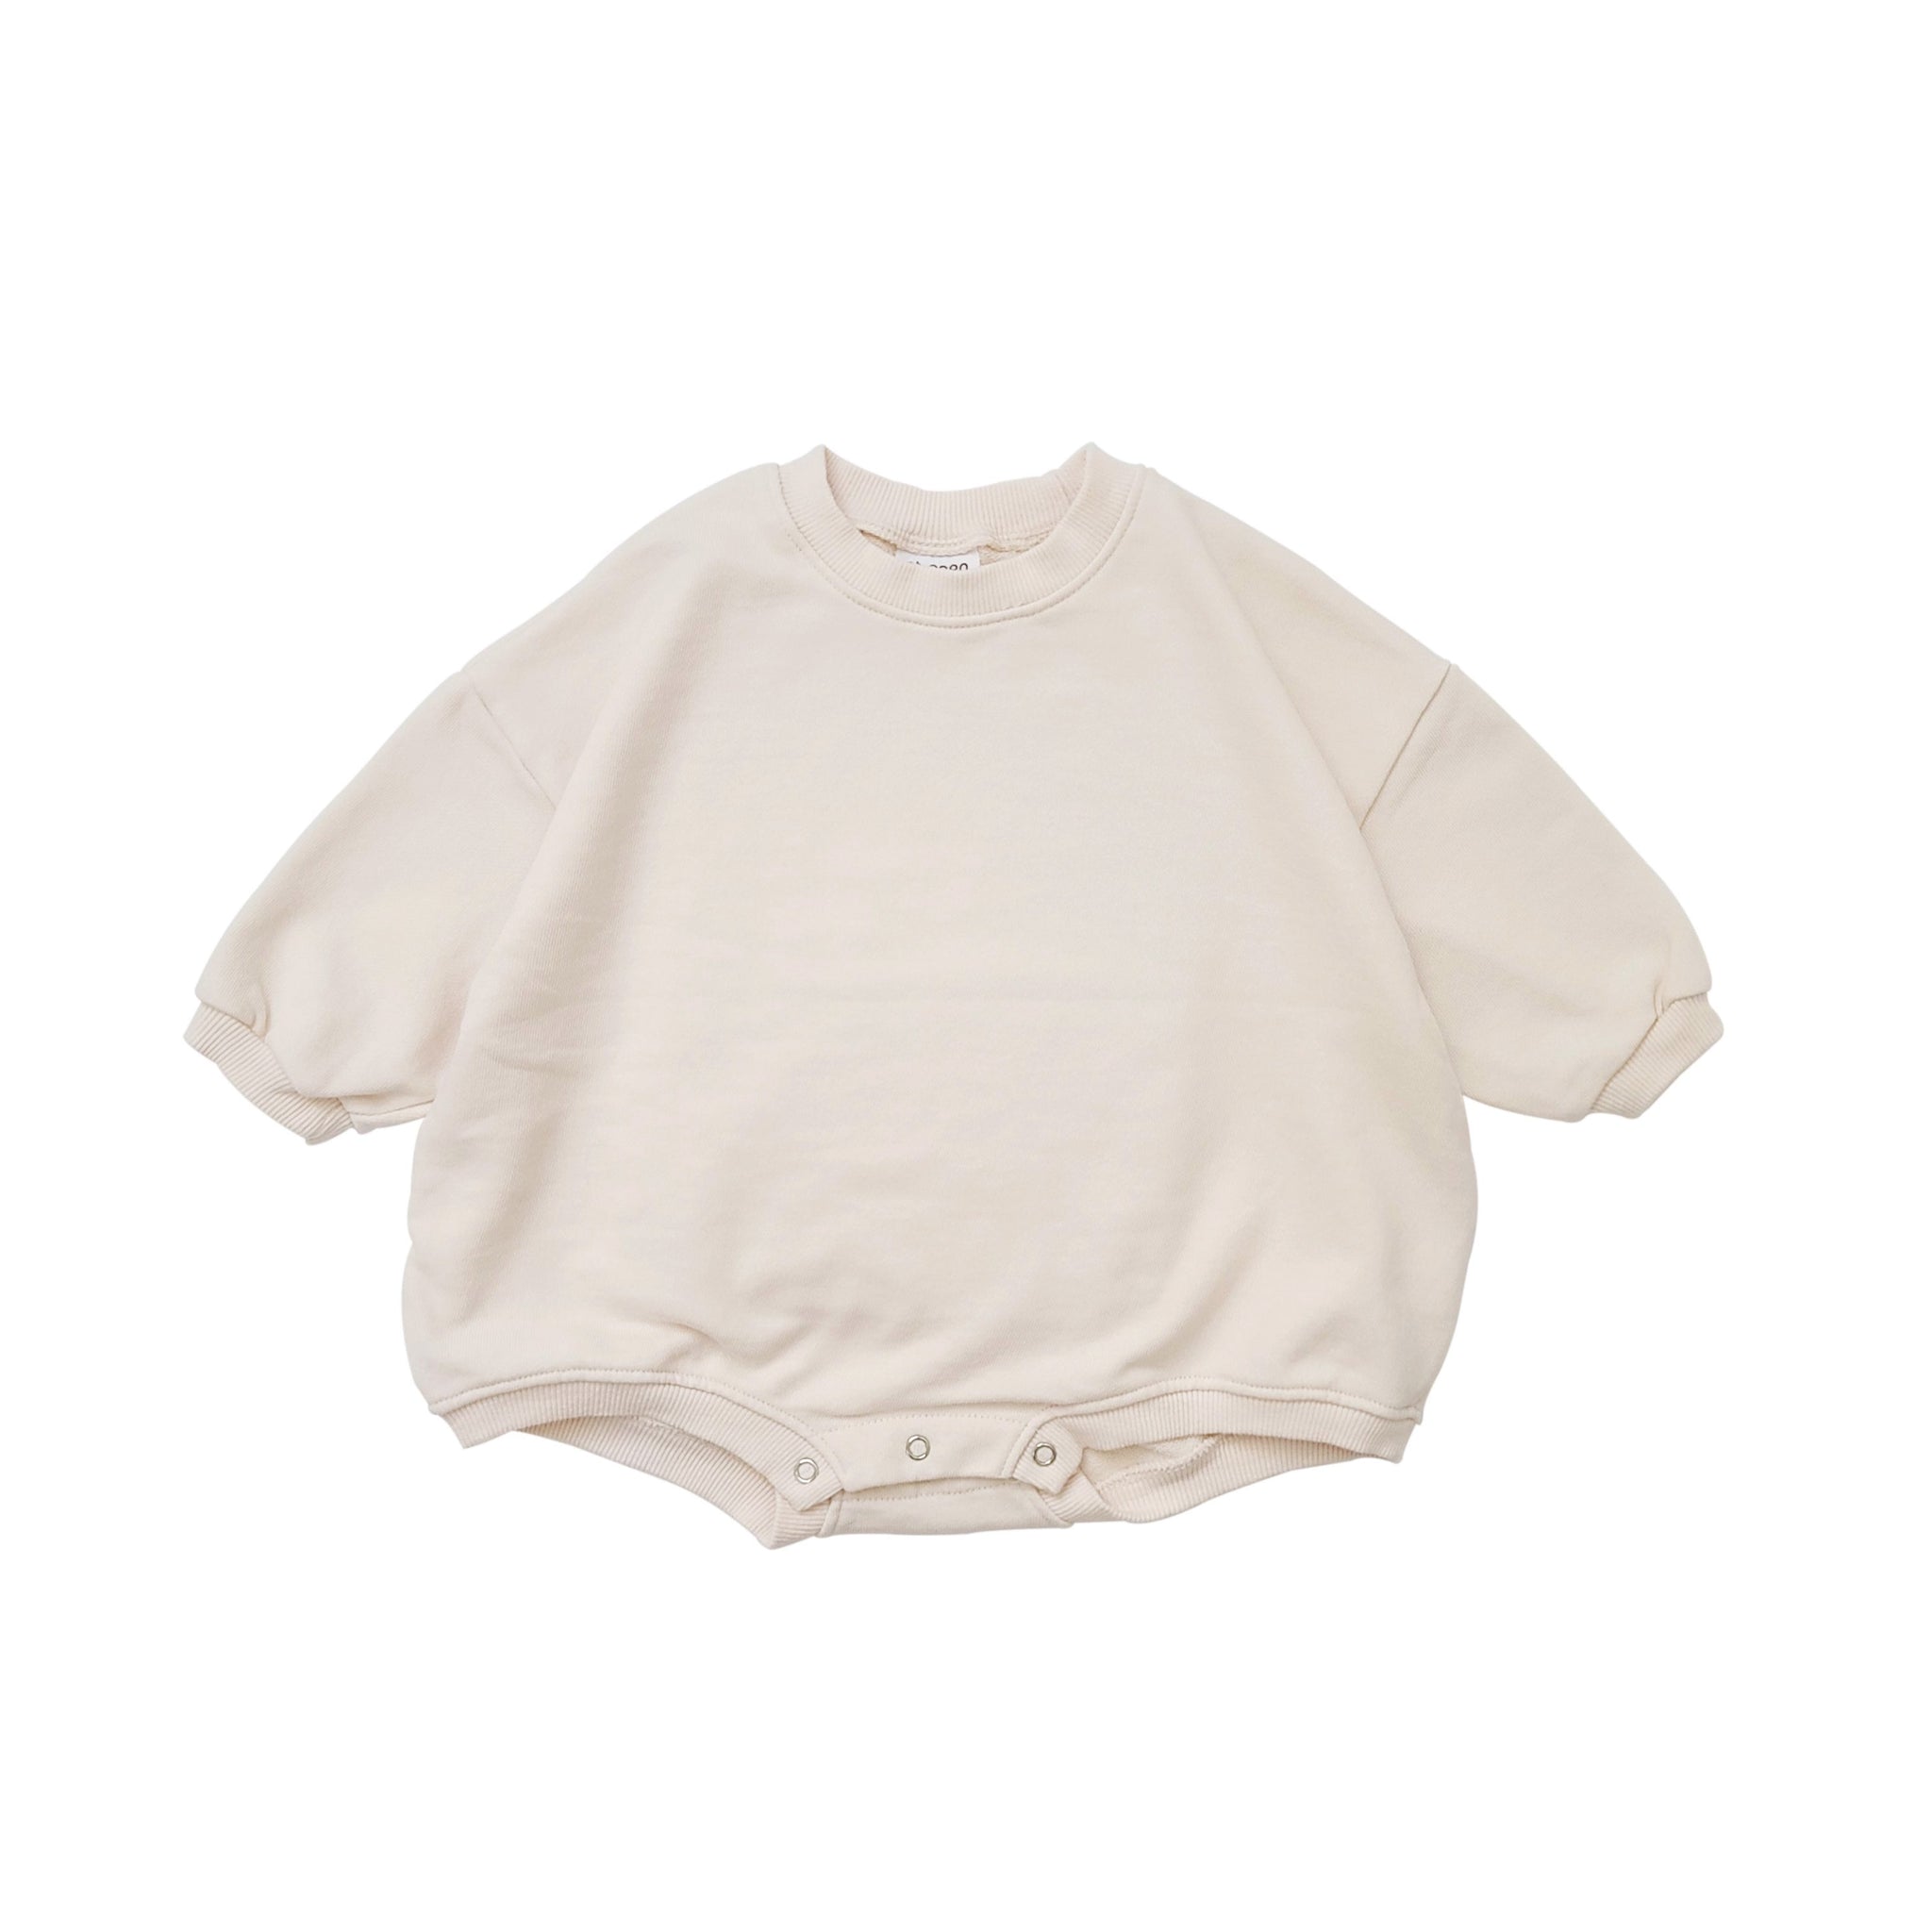 Baby Sweatshirt Romper (3-24m) - Cream - AT NOON STORE